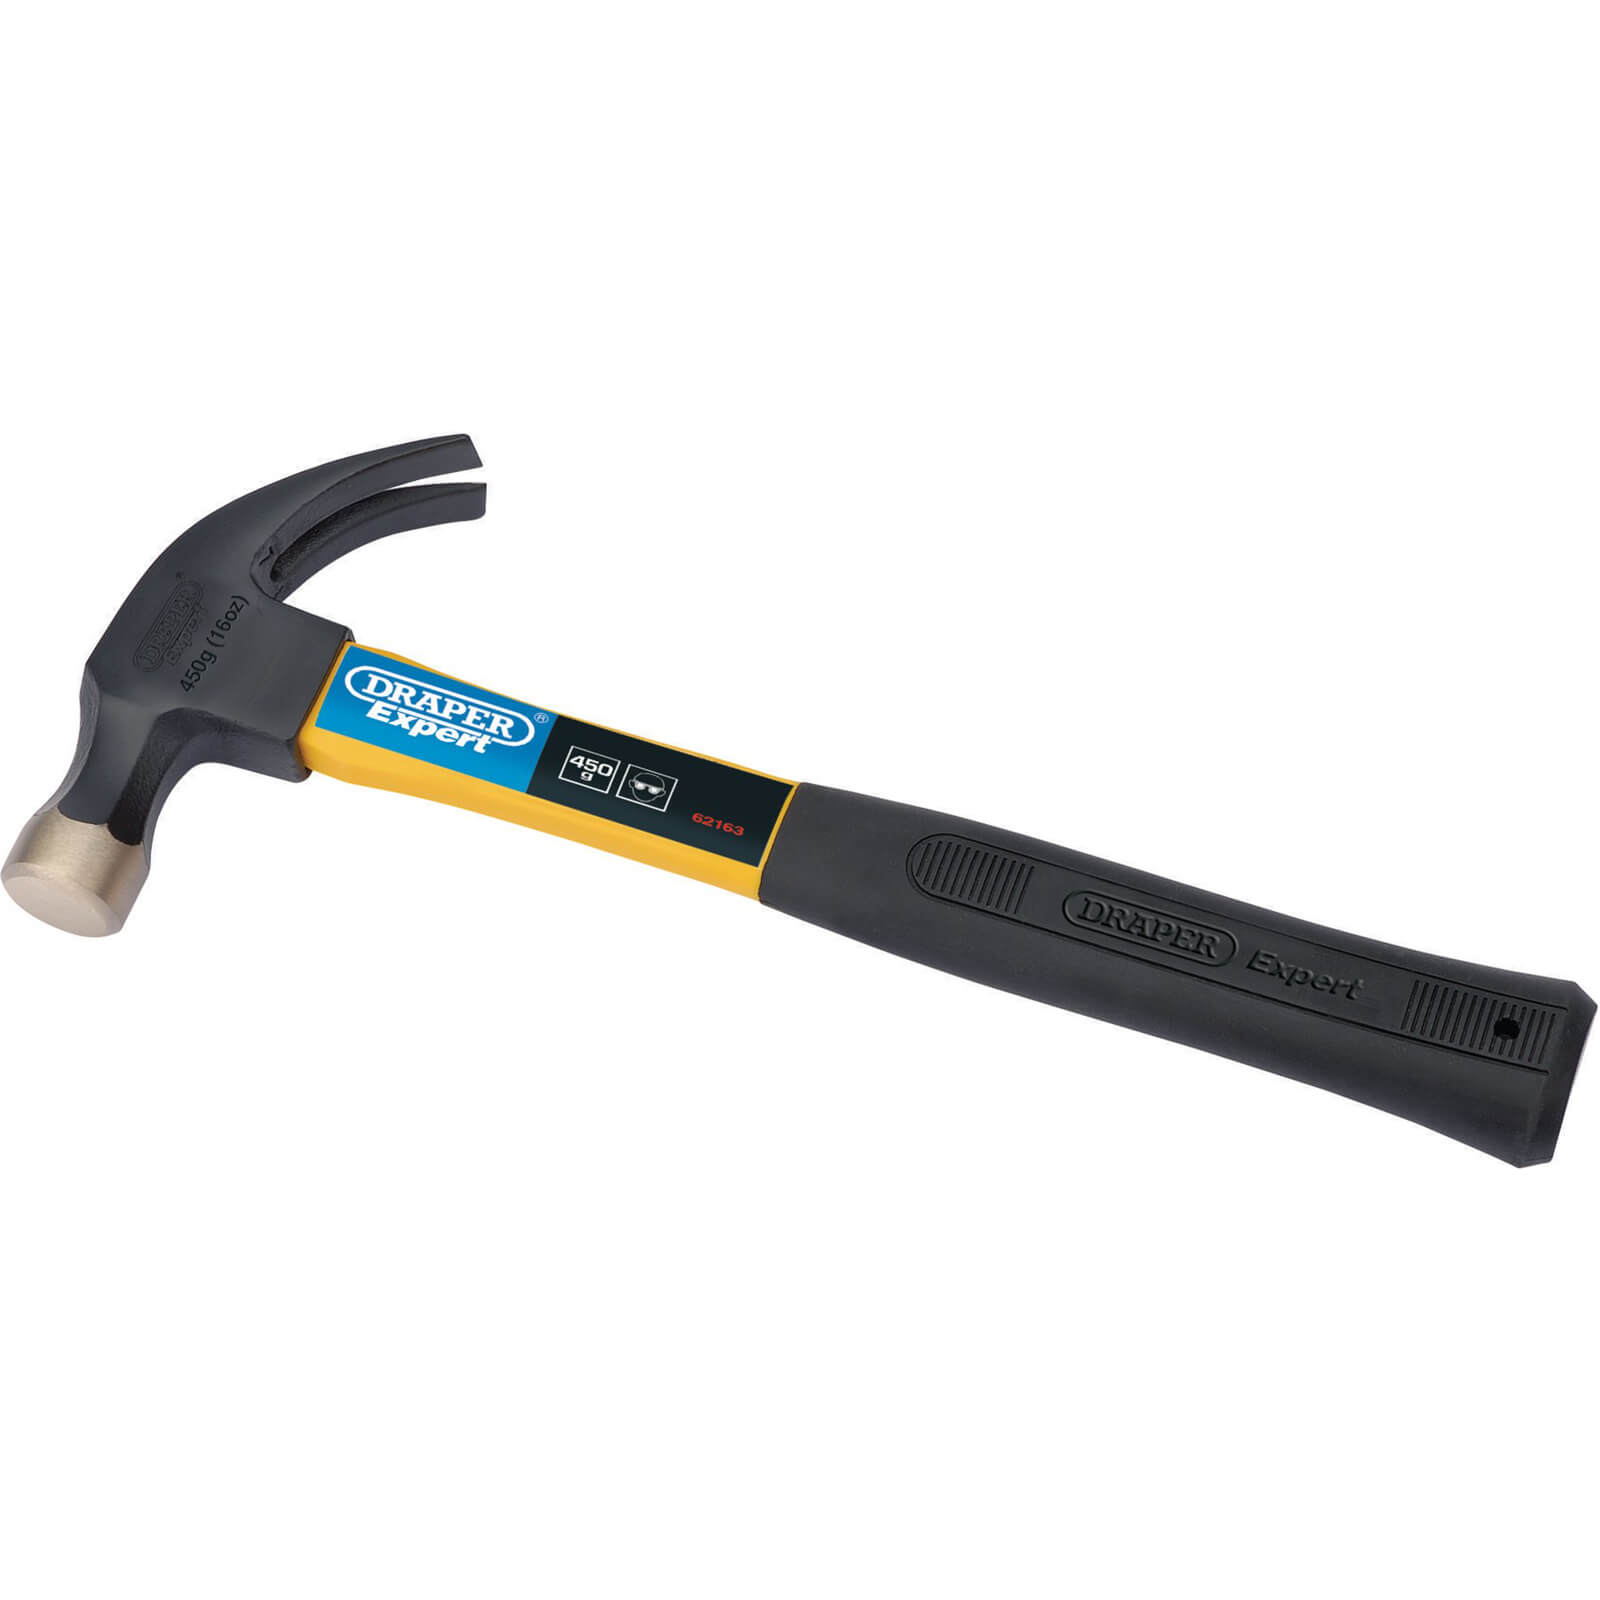 Image of Draper Expert Claw Hammer 450g